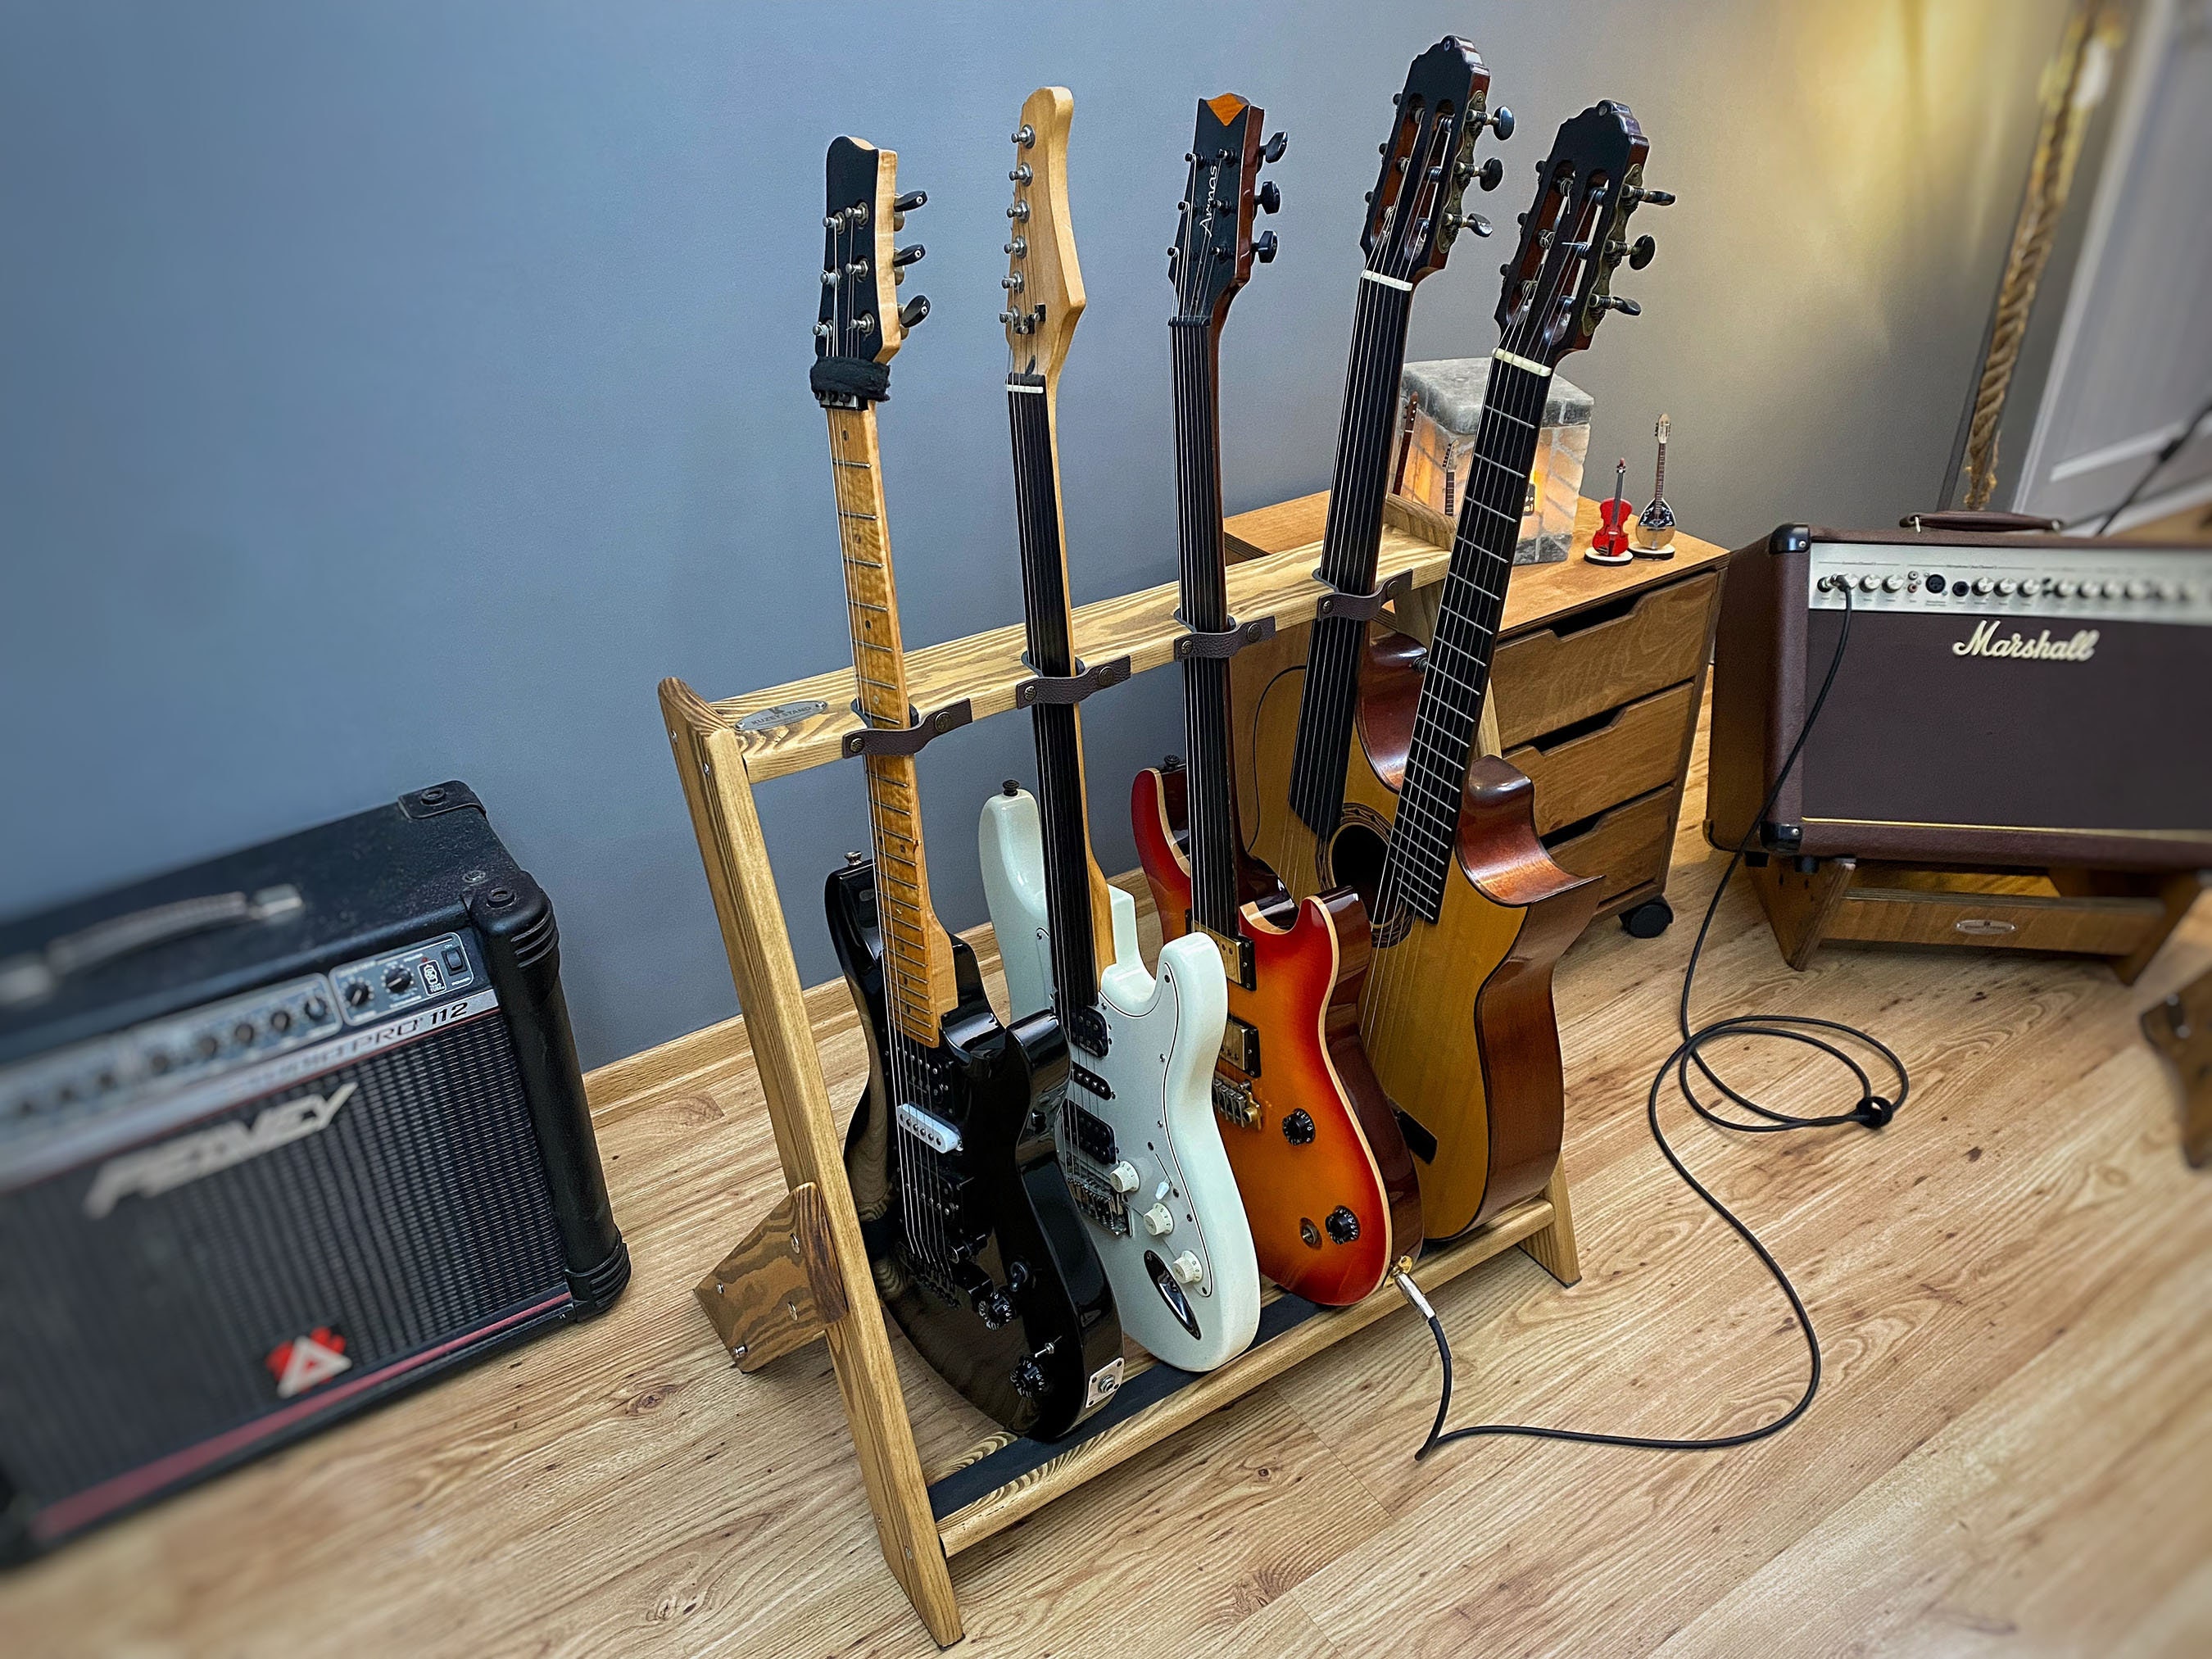 Wood Multiple Guitar Stand,guitar Rack,guitar Furniture,guitarist Birthday  Gift,guitar Room Decor,musical Instrument Stand 